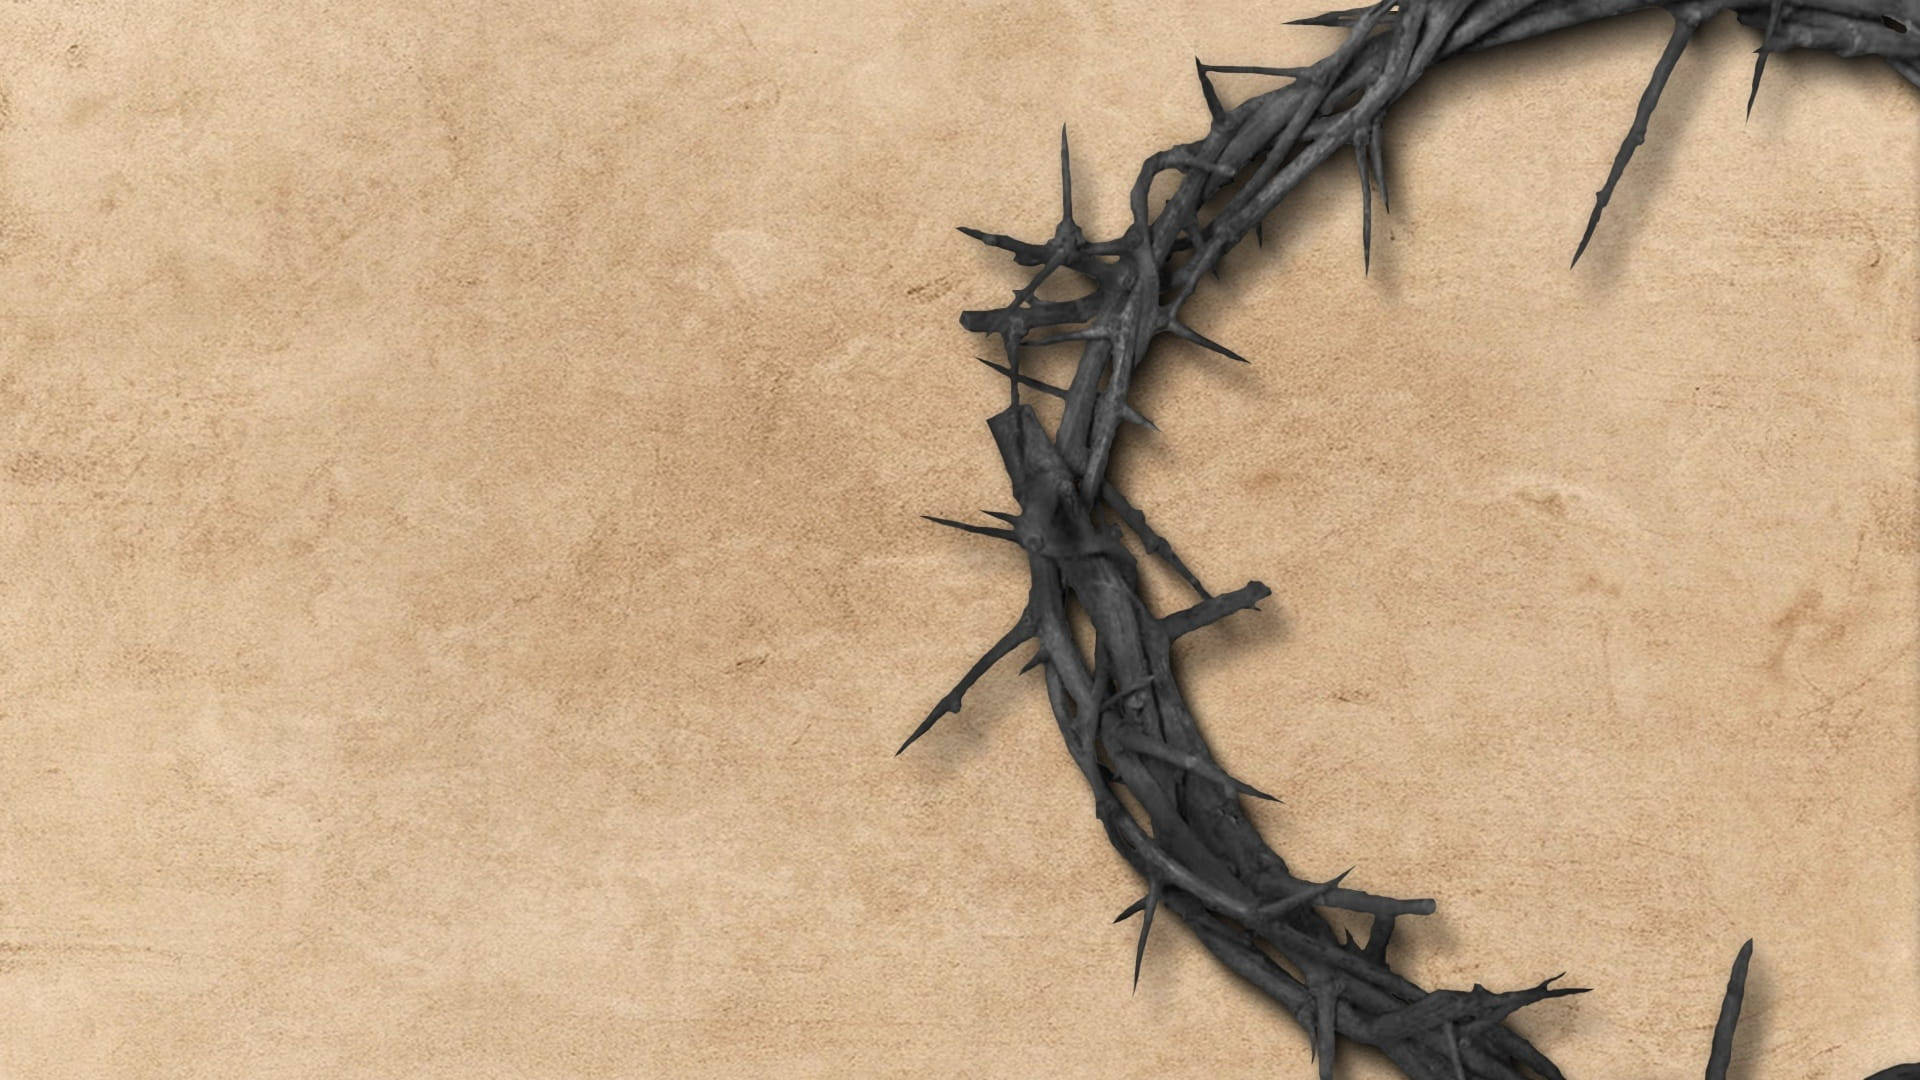 jesus christ crown of thorns